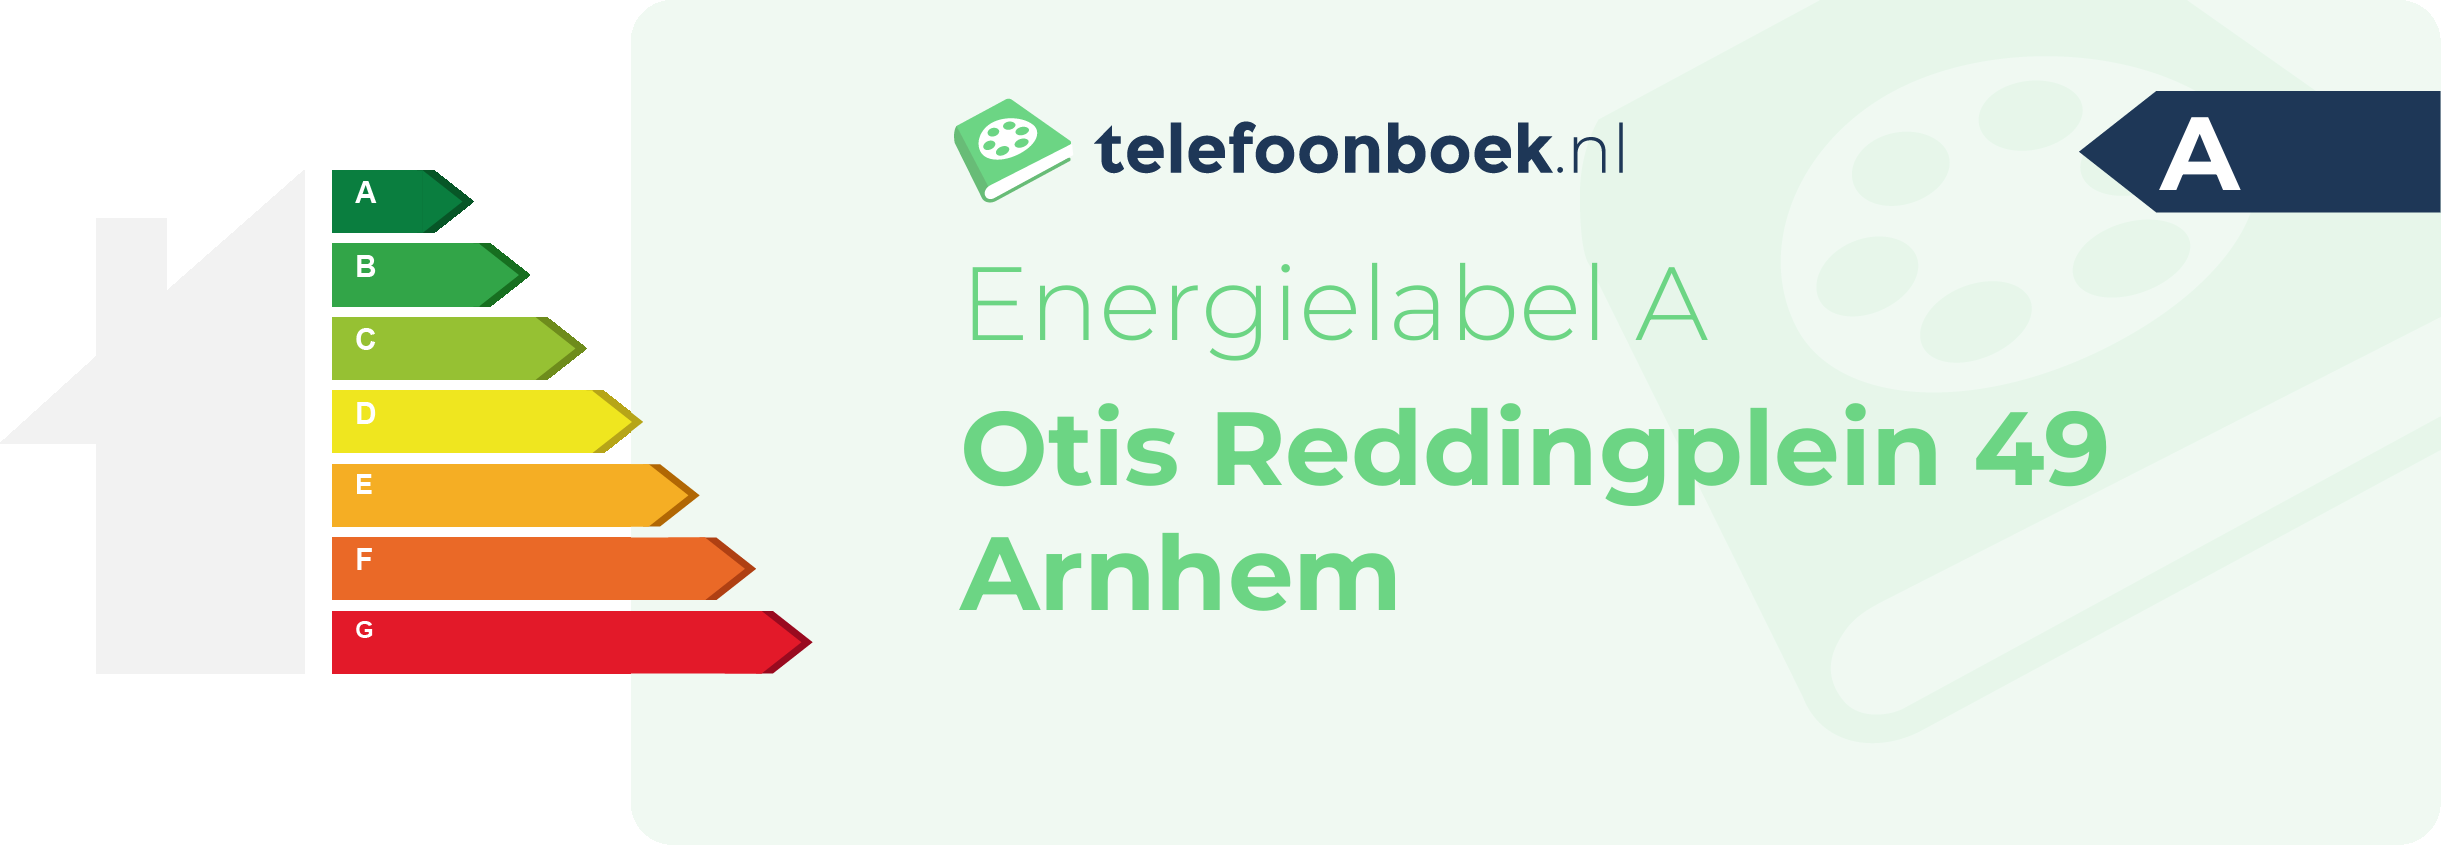 Energielabel Otis Reddingplein 49 Arnhem